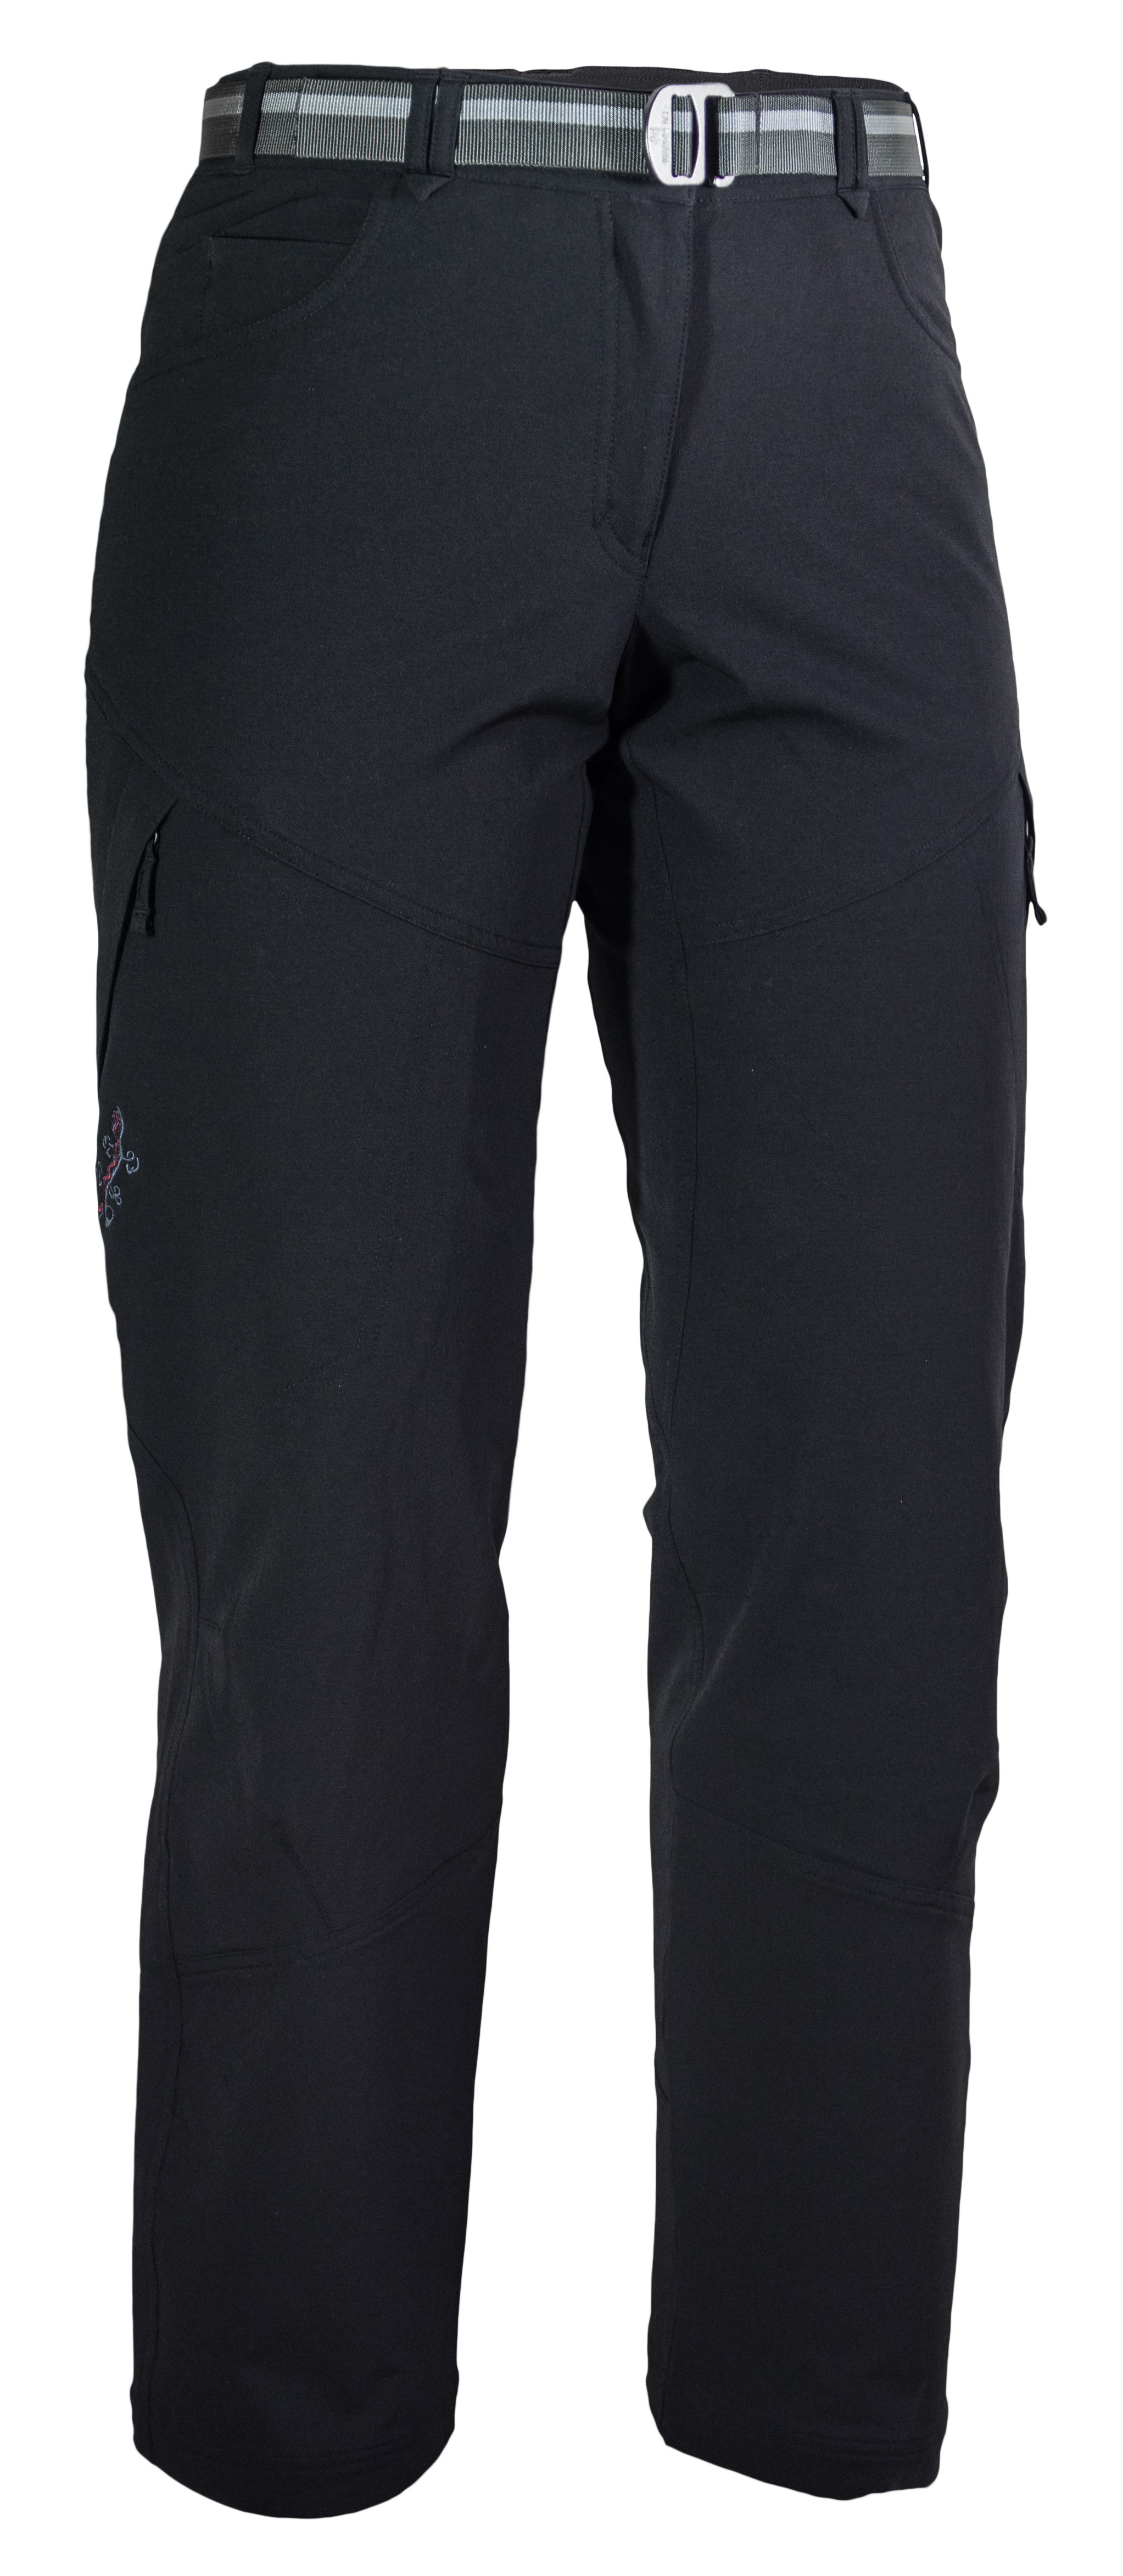 Dámské kalhoty Warmpeace Torpa II neukončená délka Barva: Black, Velikost: XL